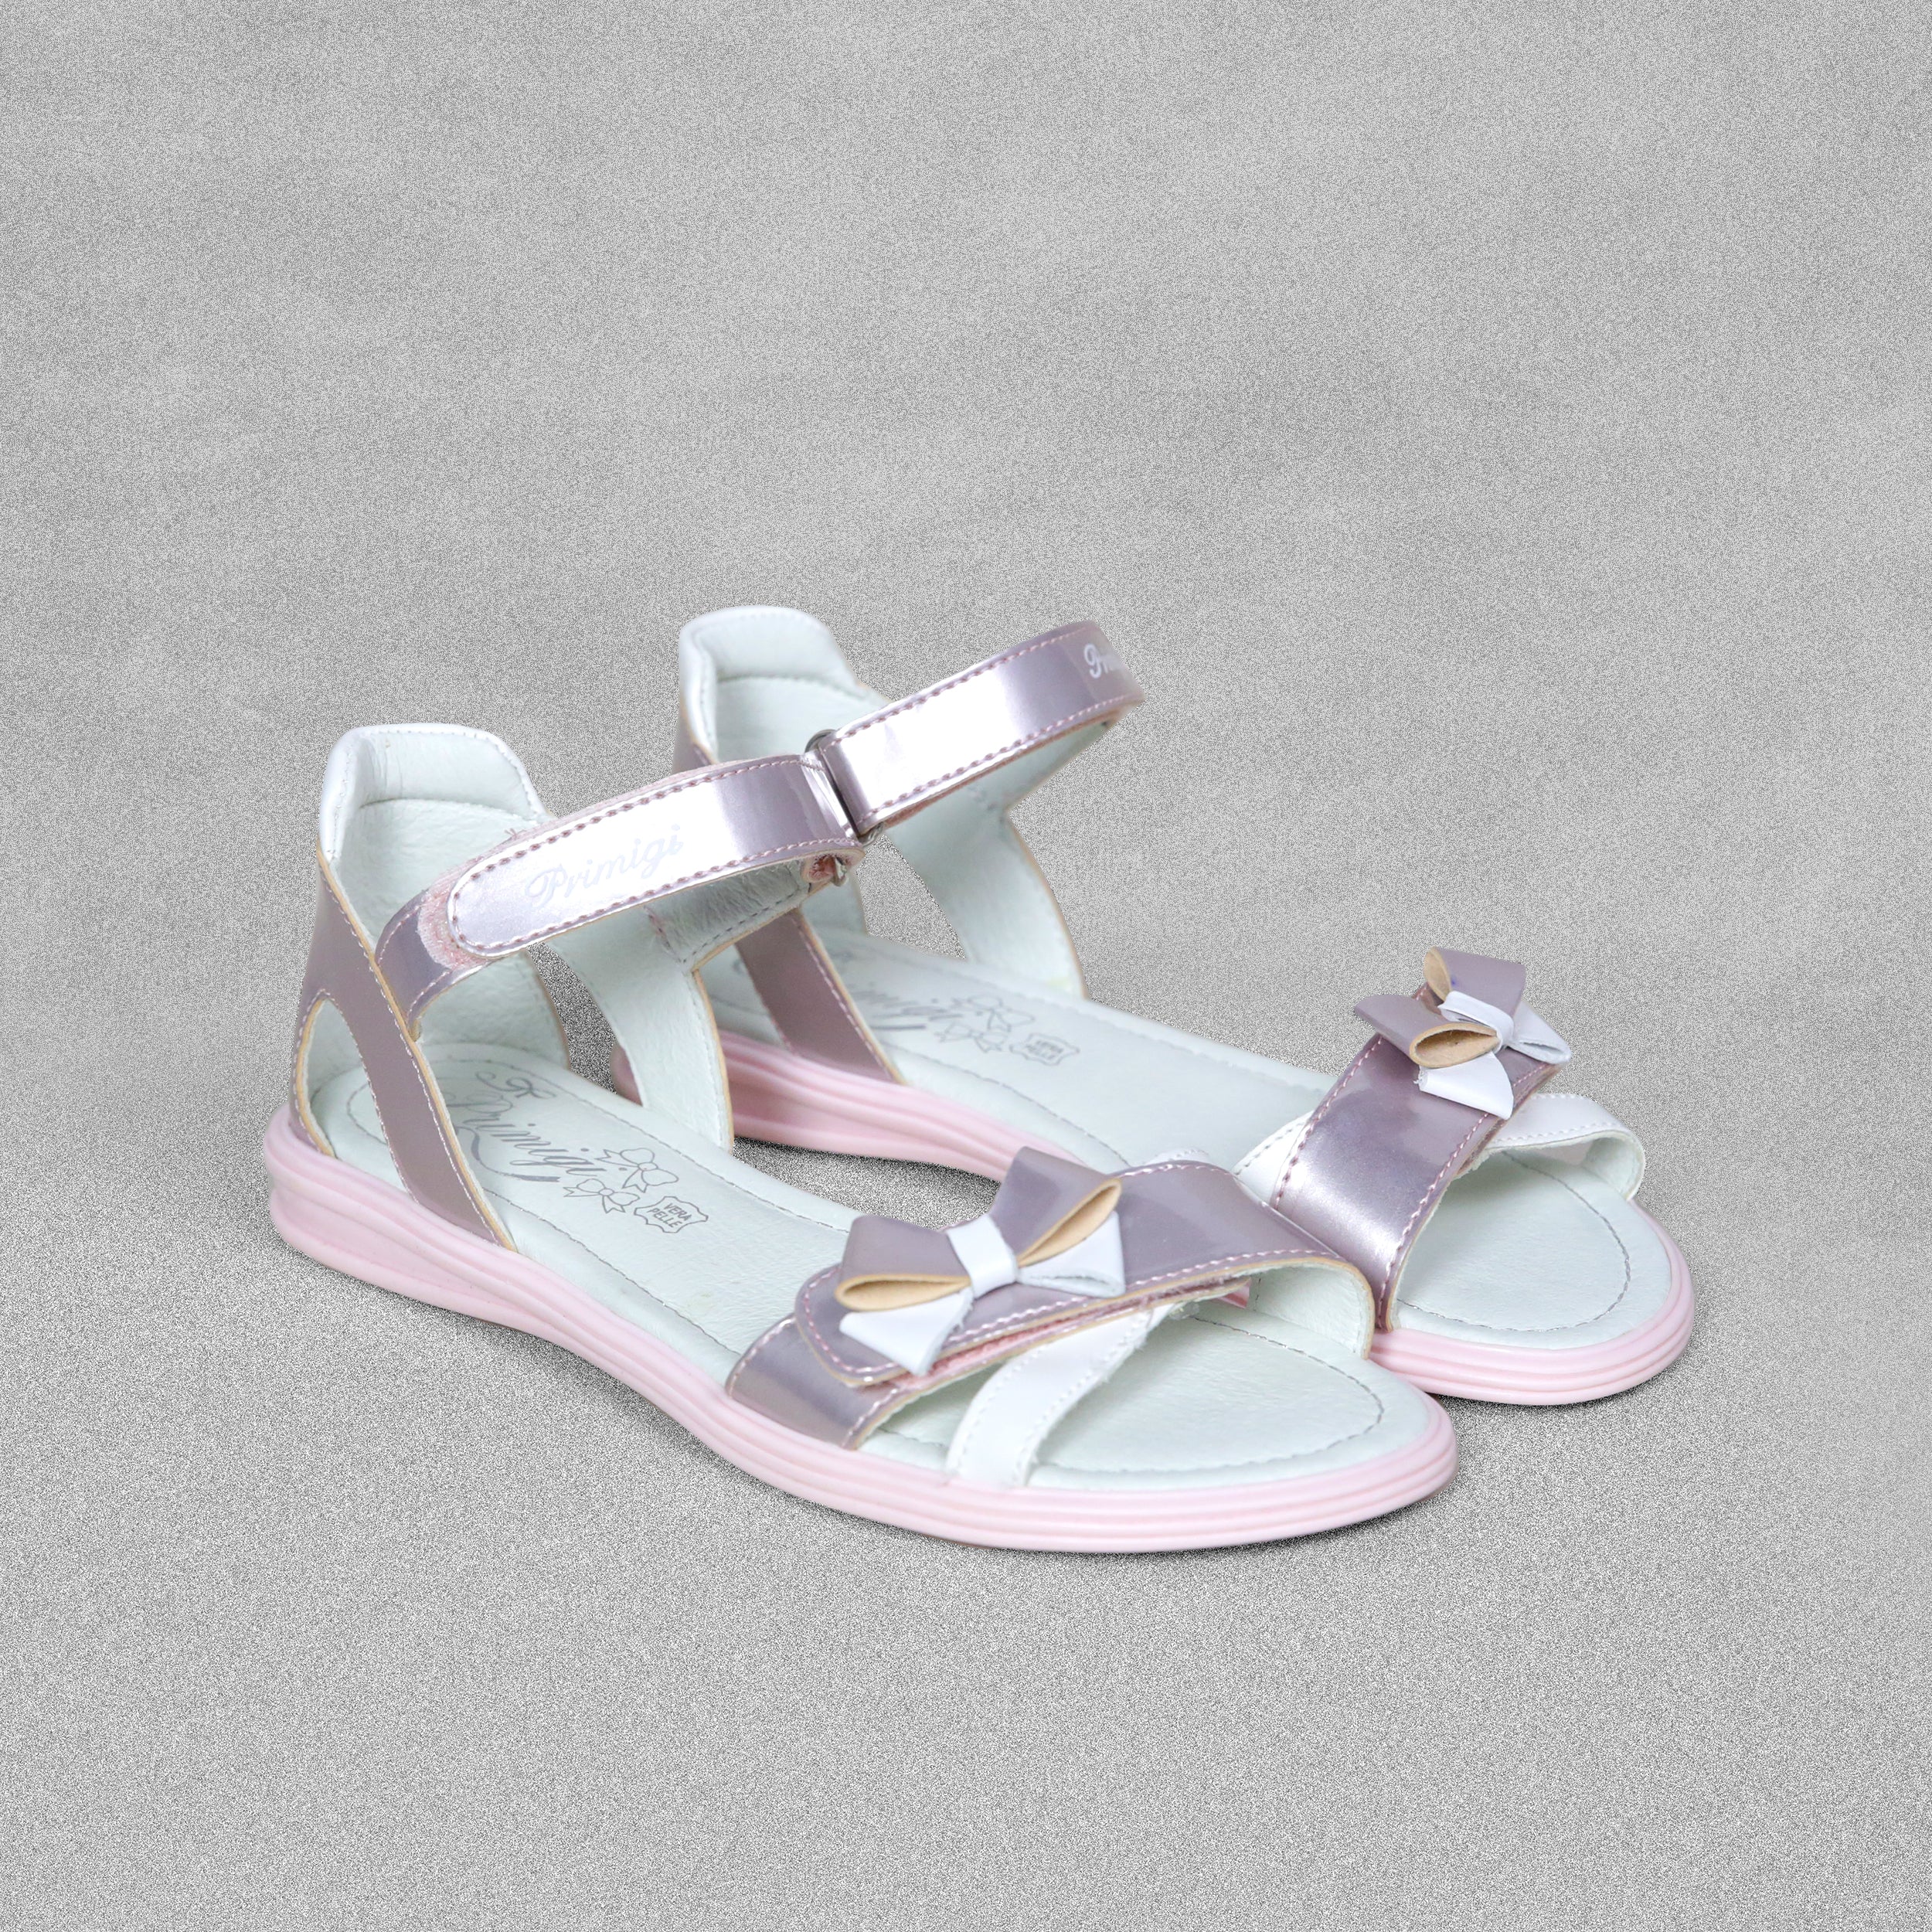 'Primigi' Girls Pale Pink Metallic Sandals with Velcro Strap - UK Size 2.5 / EU 35